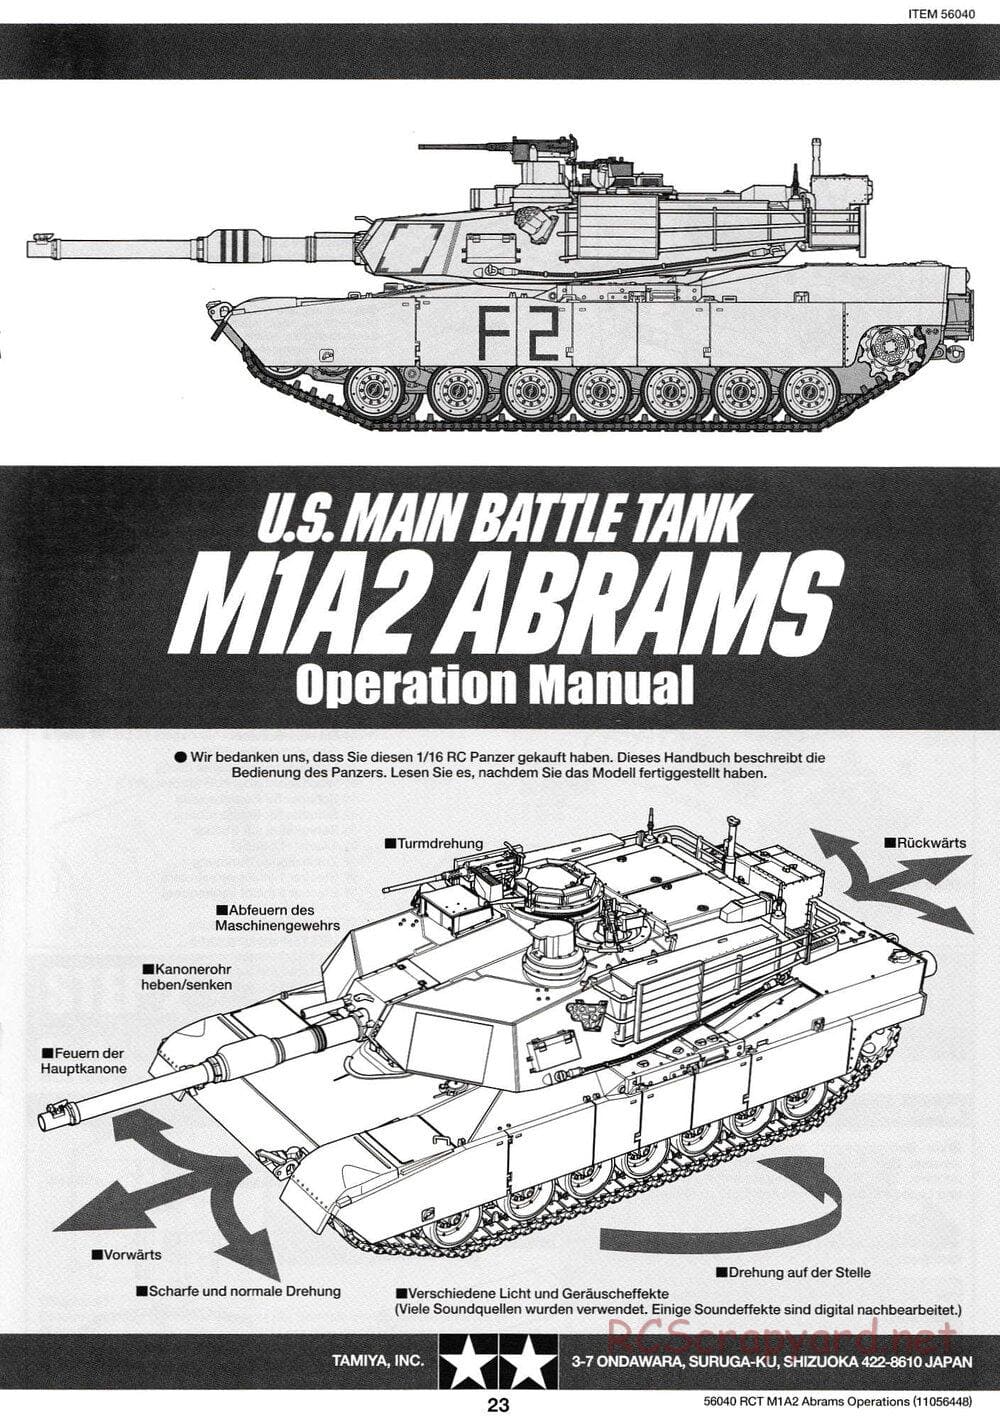 Tamiya - U.S. Main Battle Tank M1A2 Abrams - 1/16 Scale Chassis - Operation Manual - Page 1